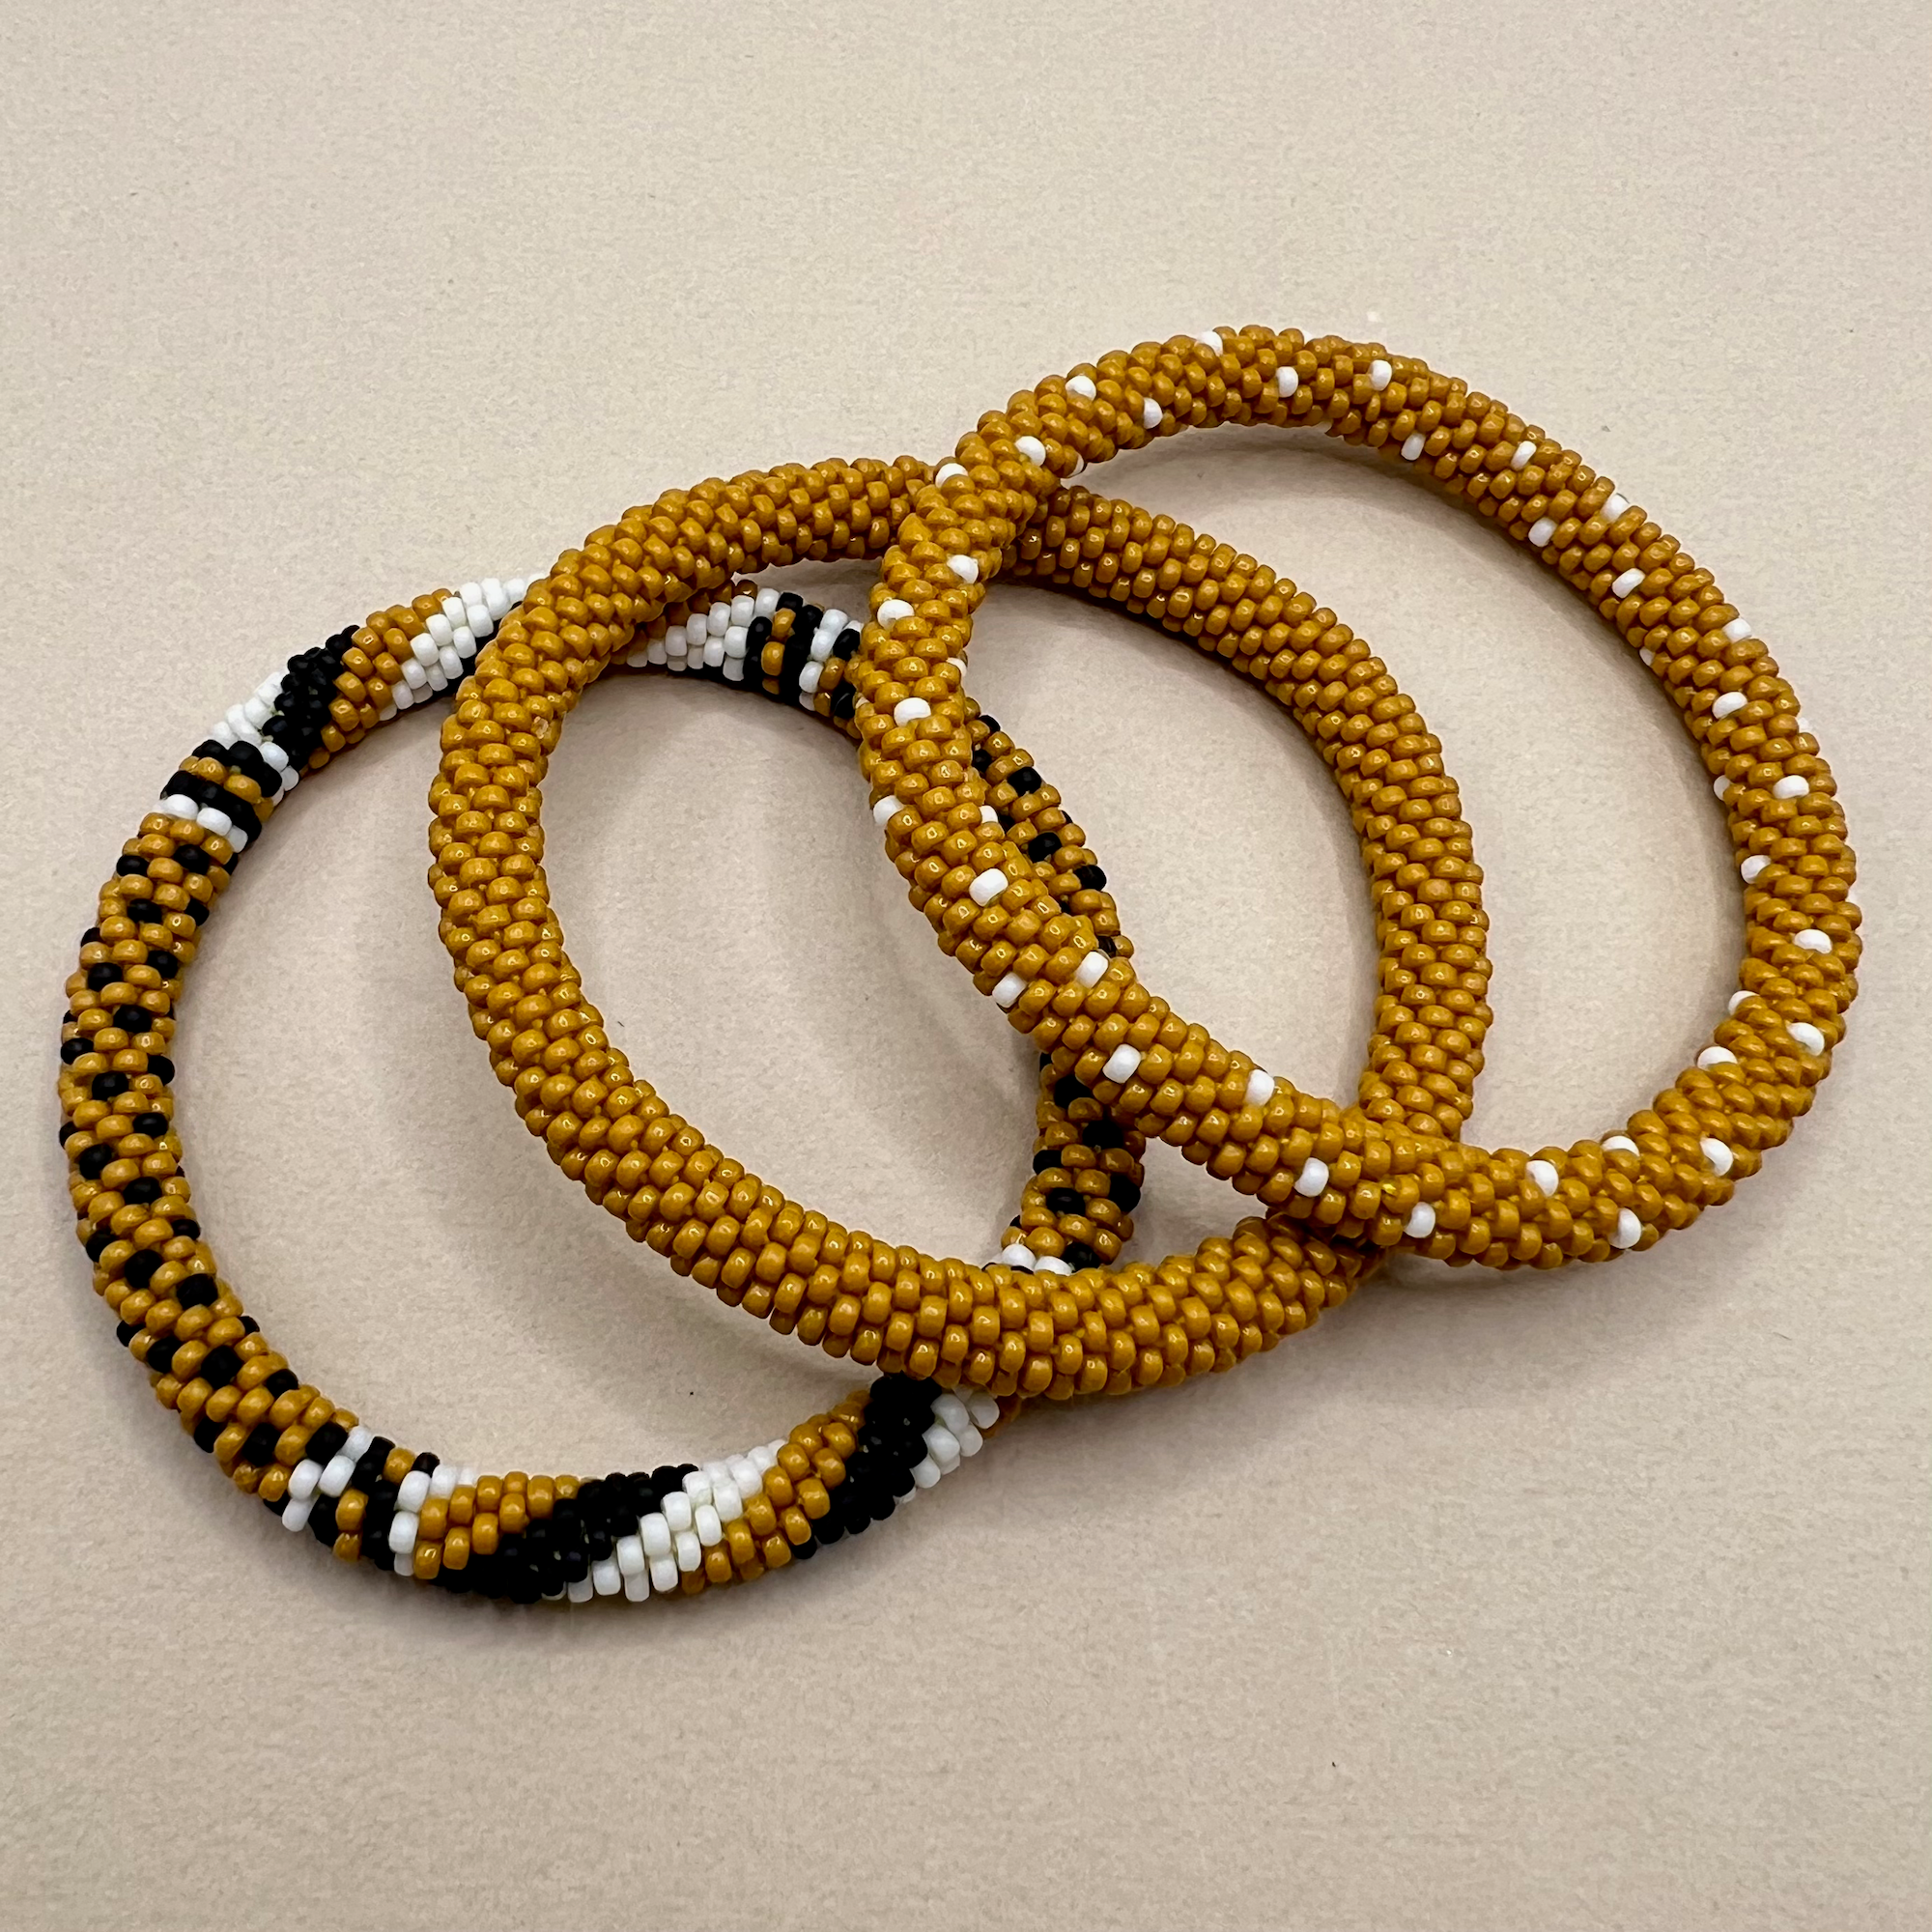 Mustard Beaded Bangle - Size 11 Beads